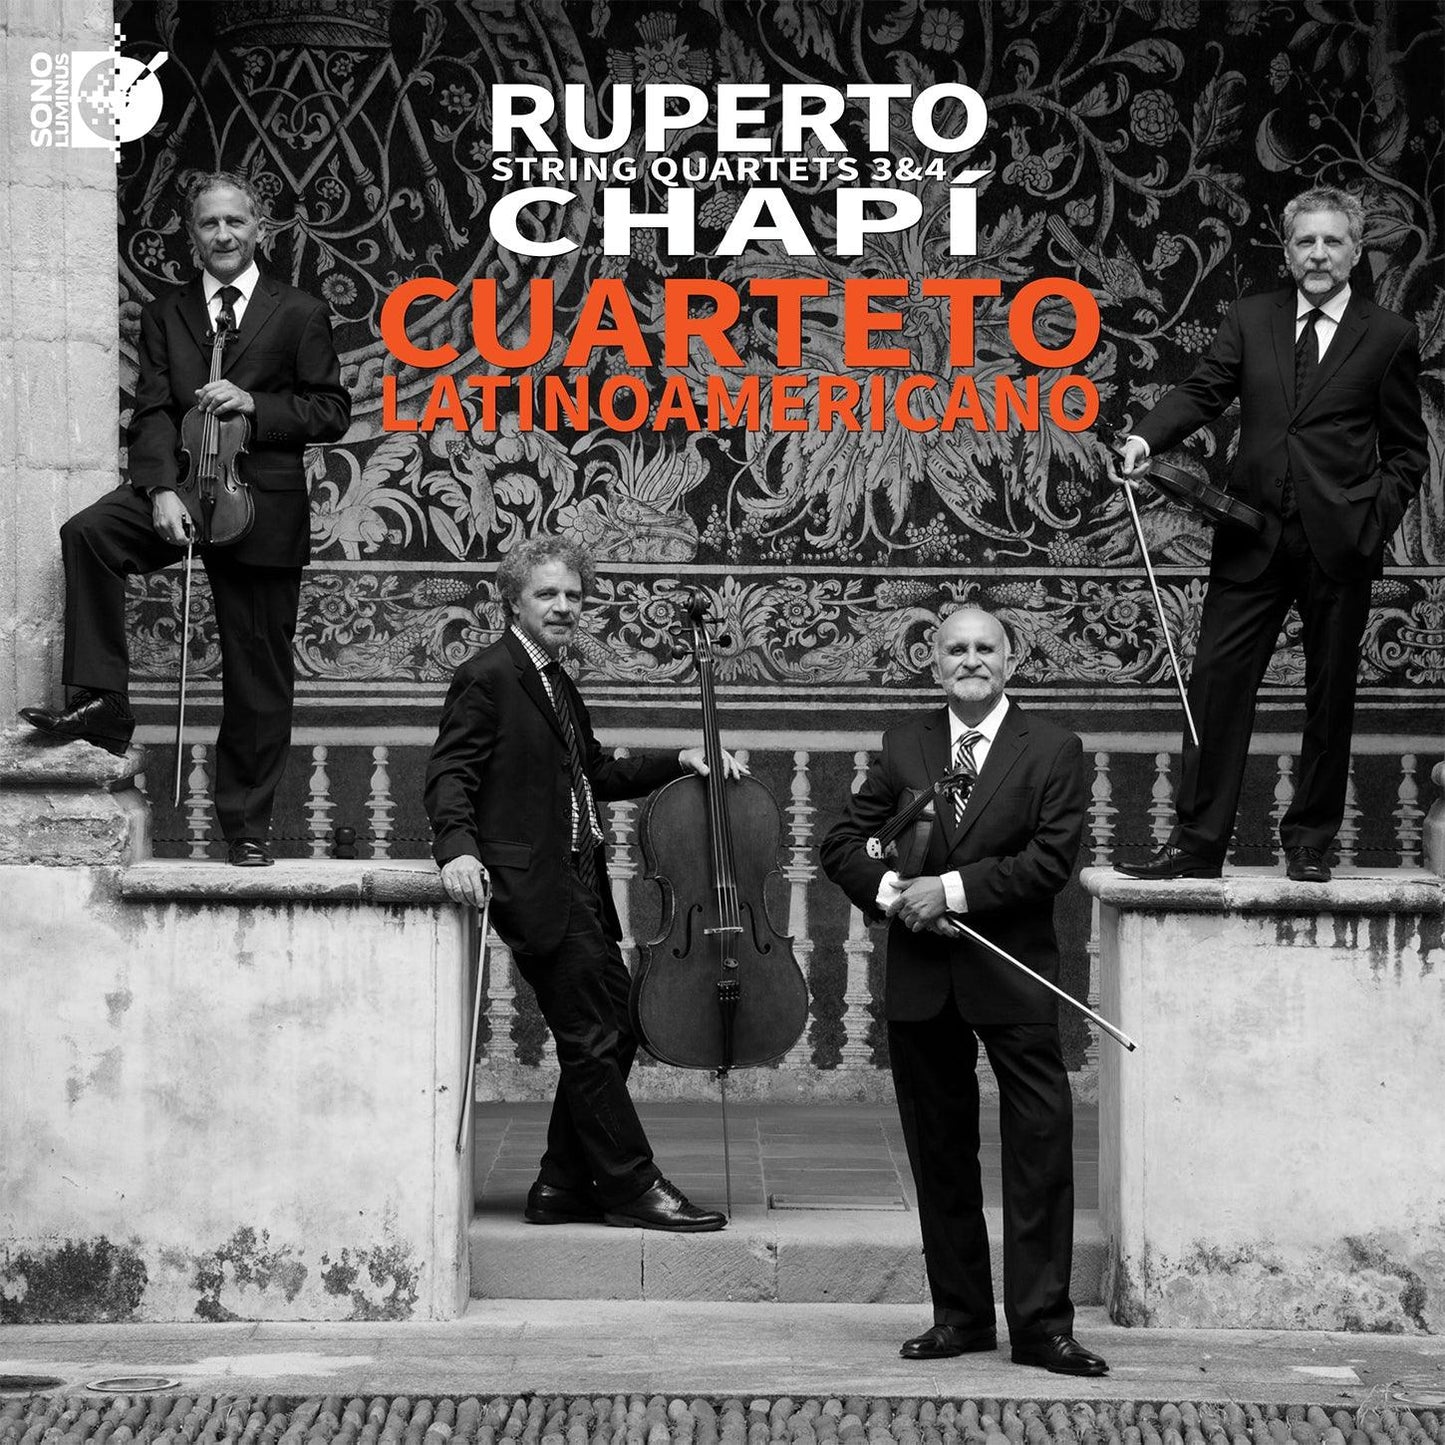 Chapi: String Quartets, Vol. 2 / Cuarteto Latinoamericano - ArkivMusic